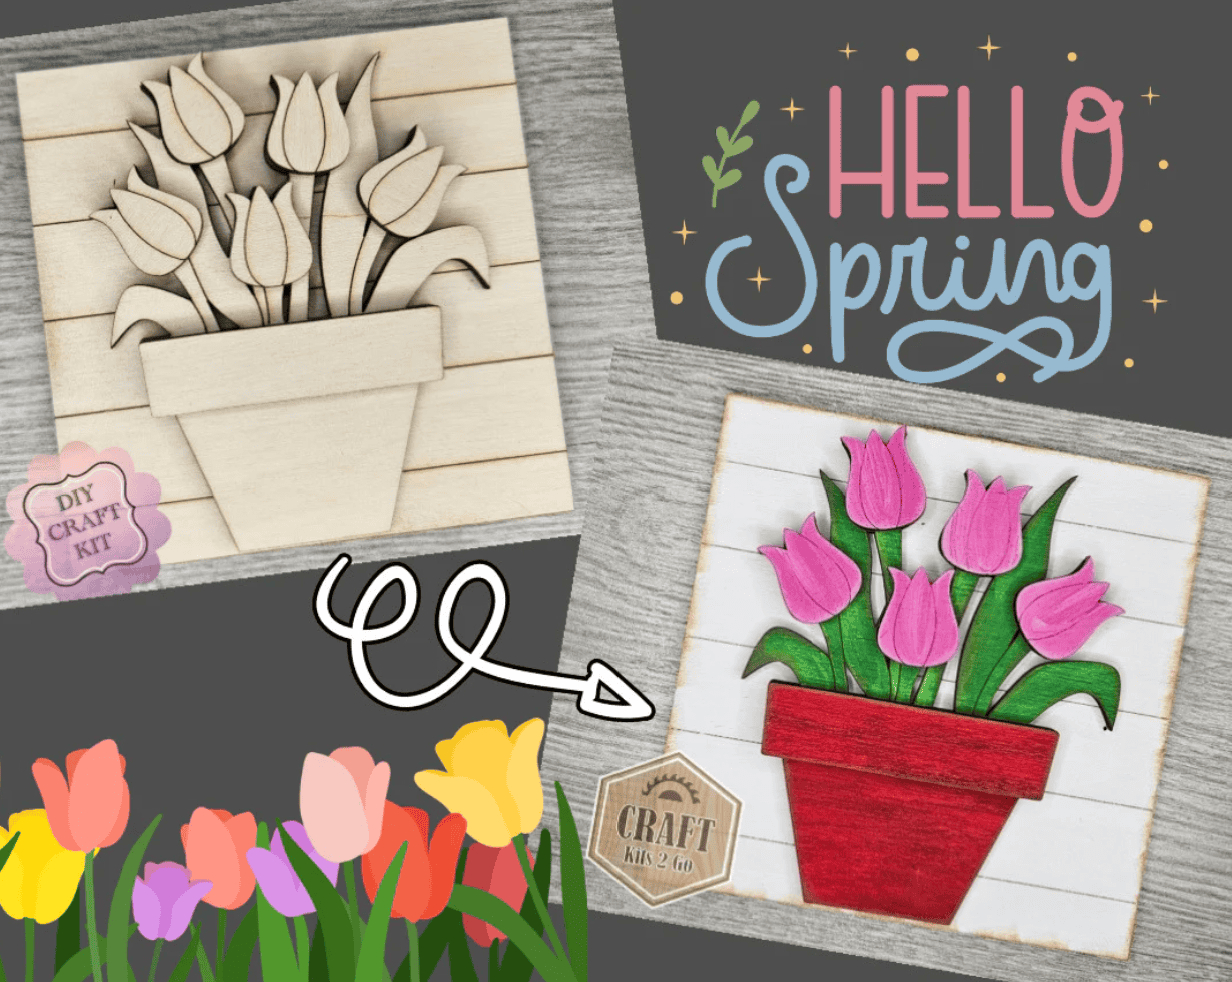 Craft Kits from Etsy - Tulips